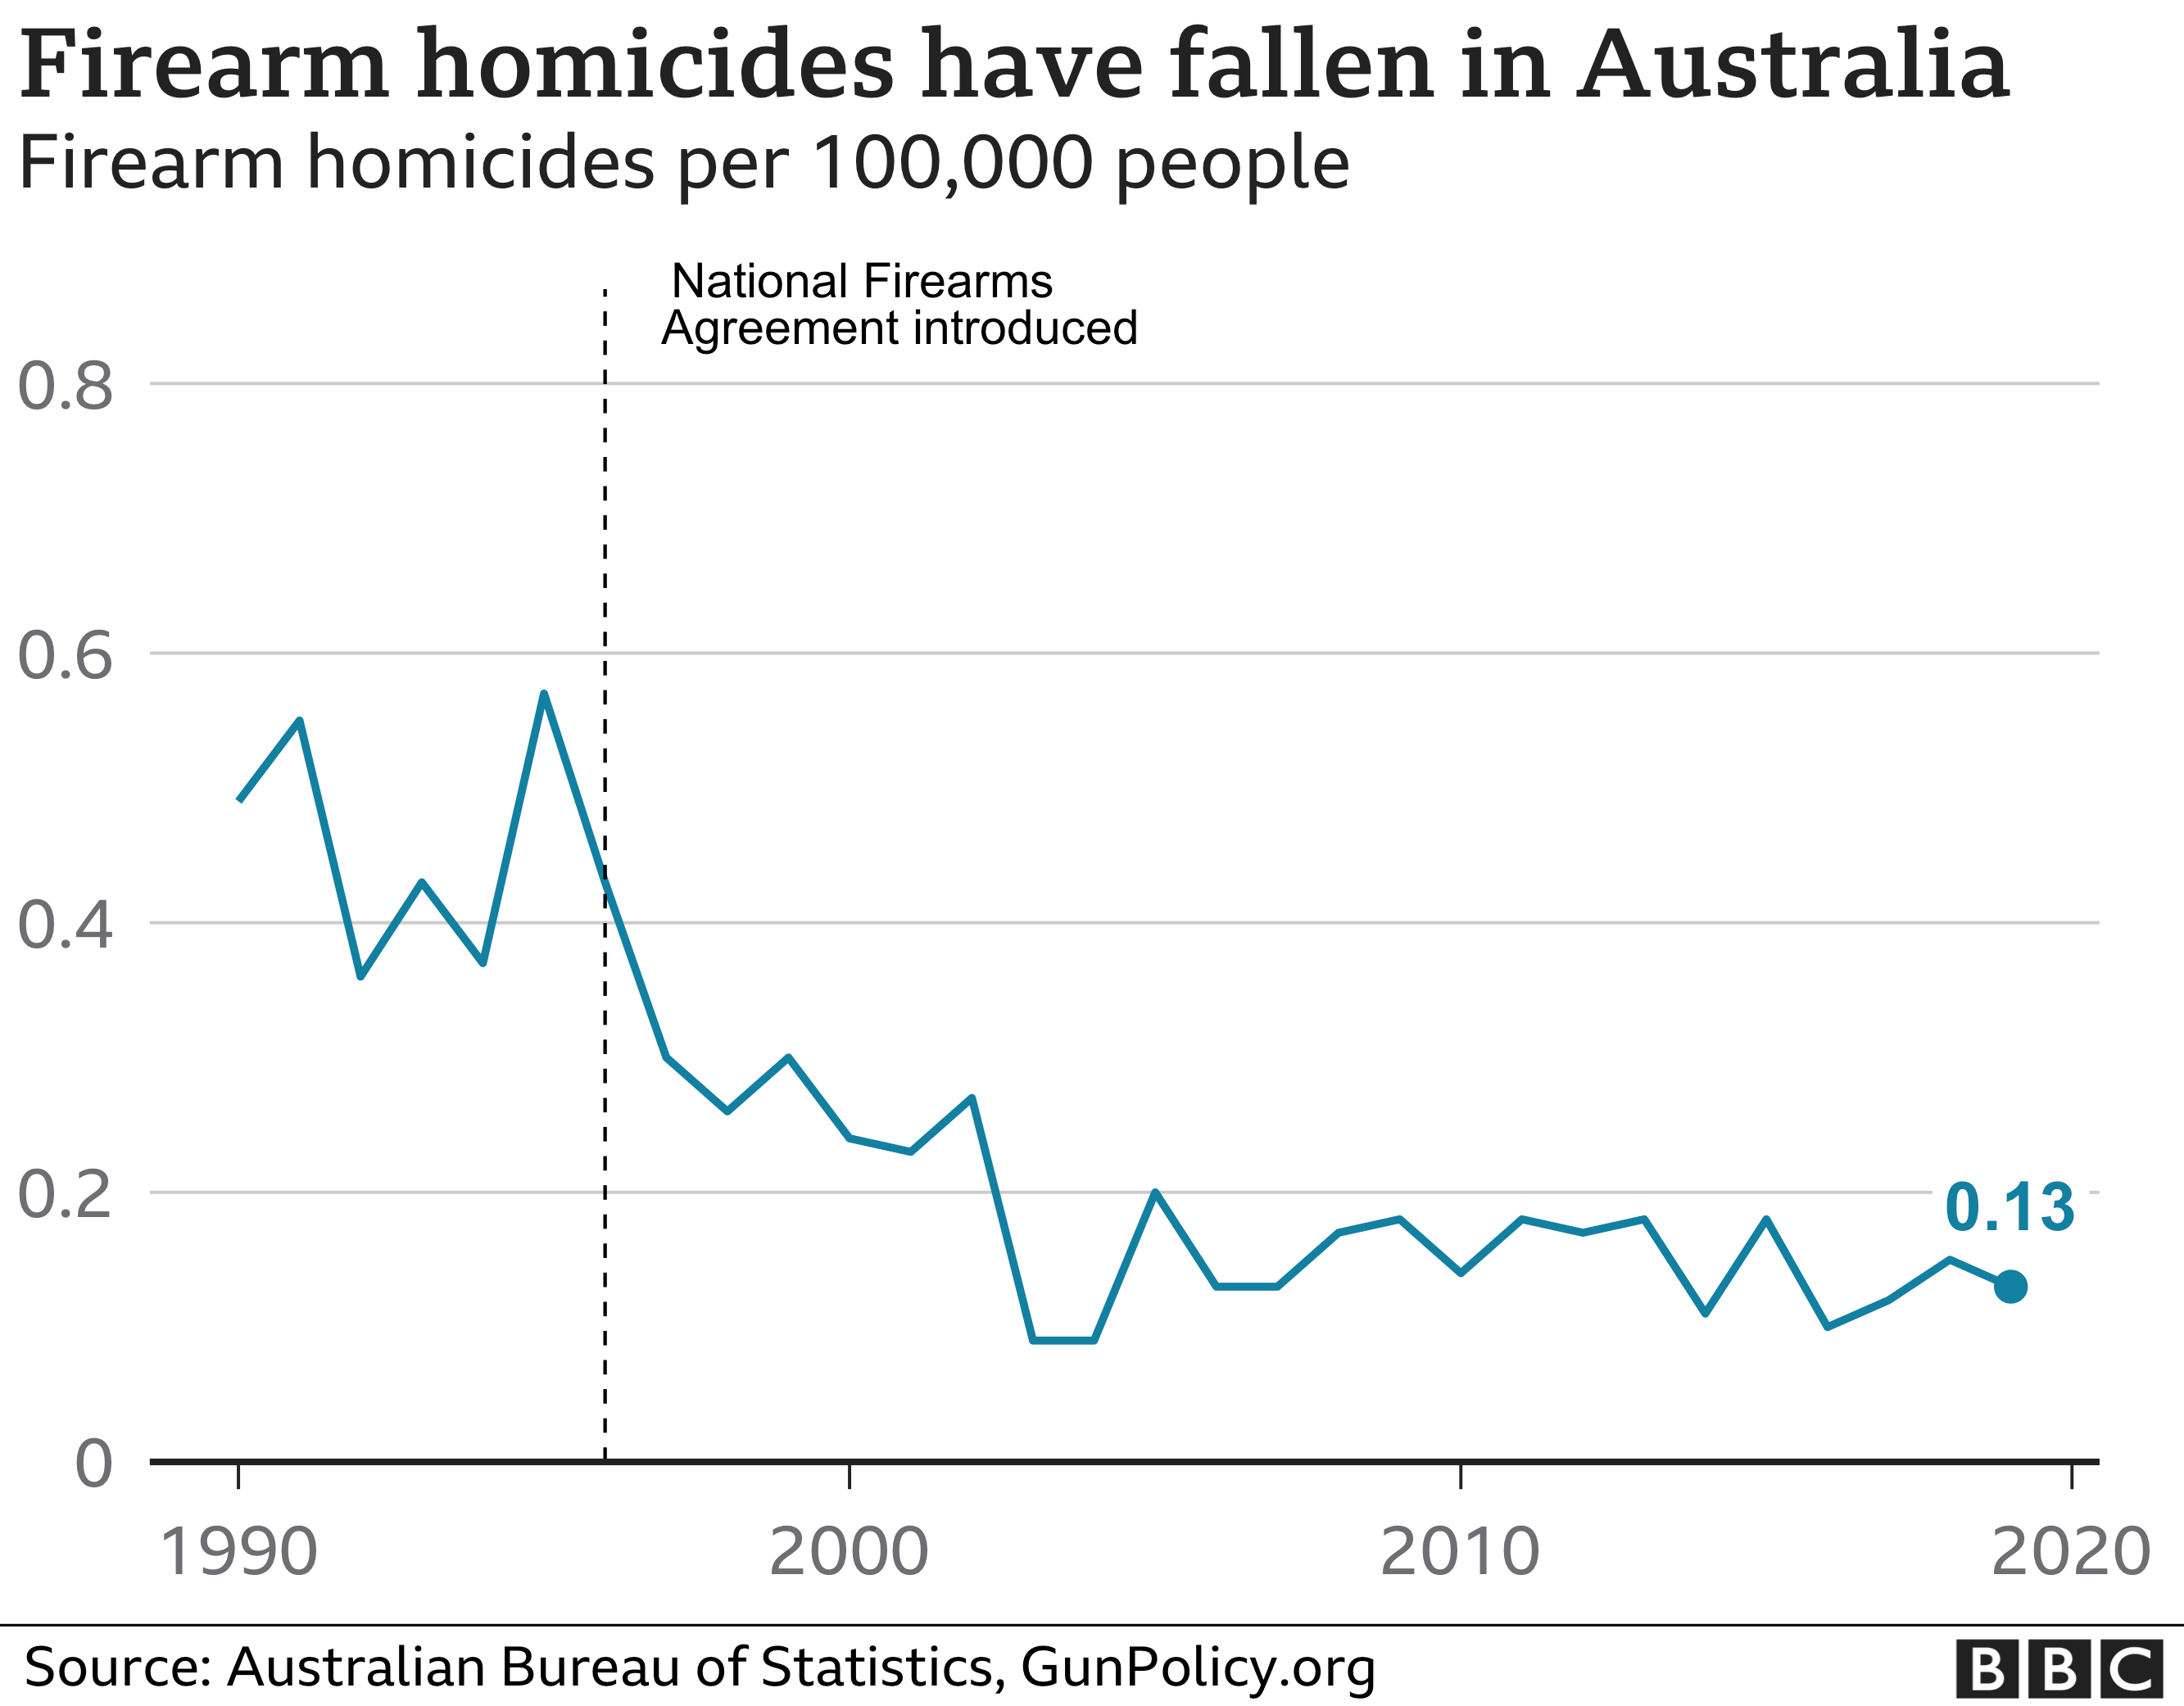 Firearm homicides